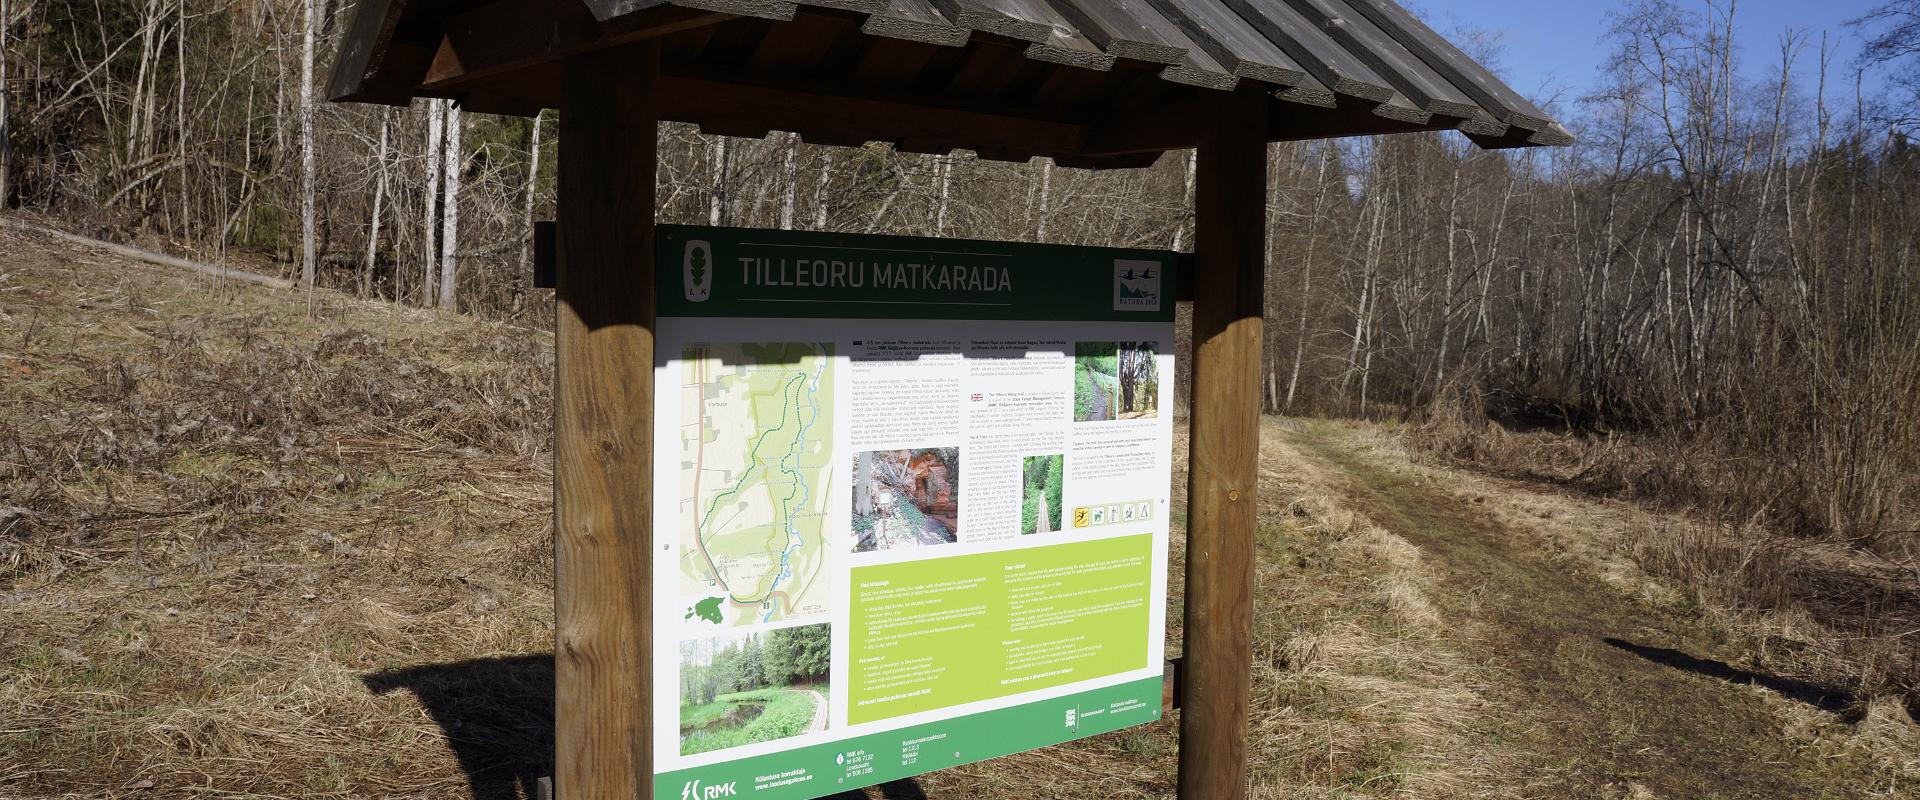 Tilleoru nature trail